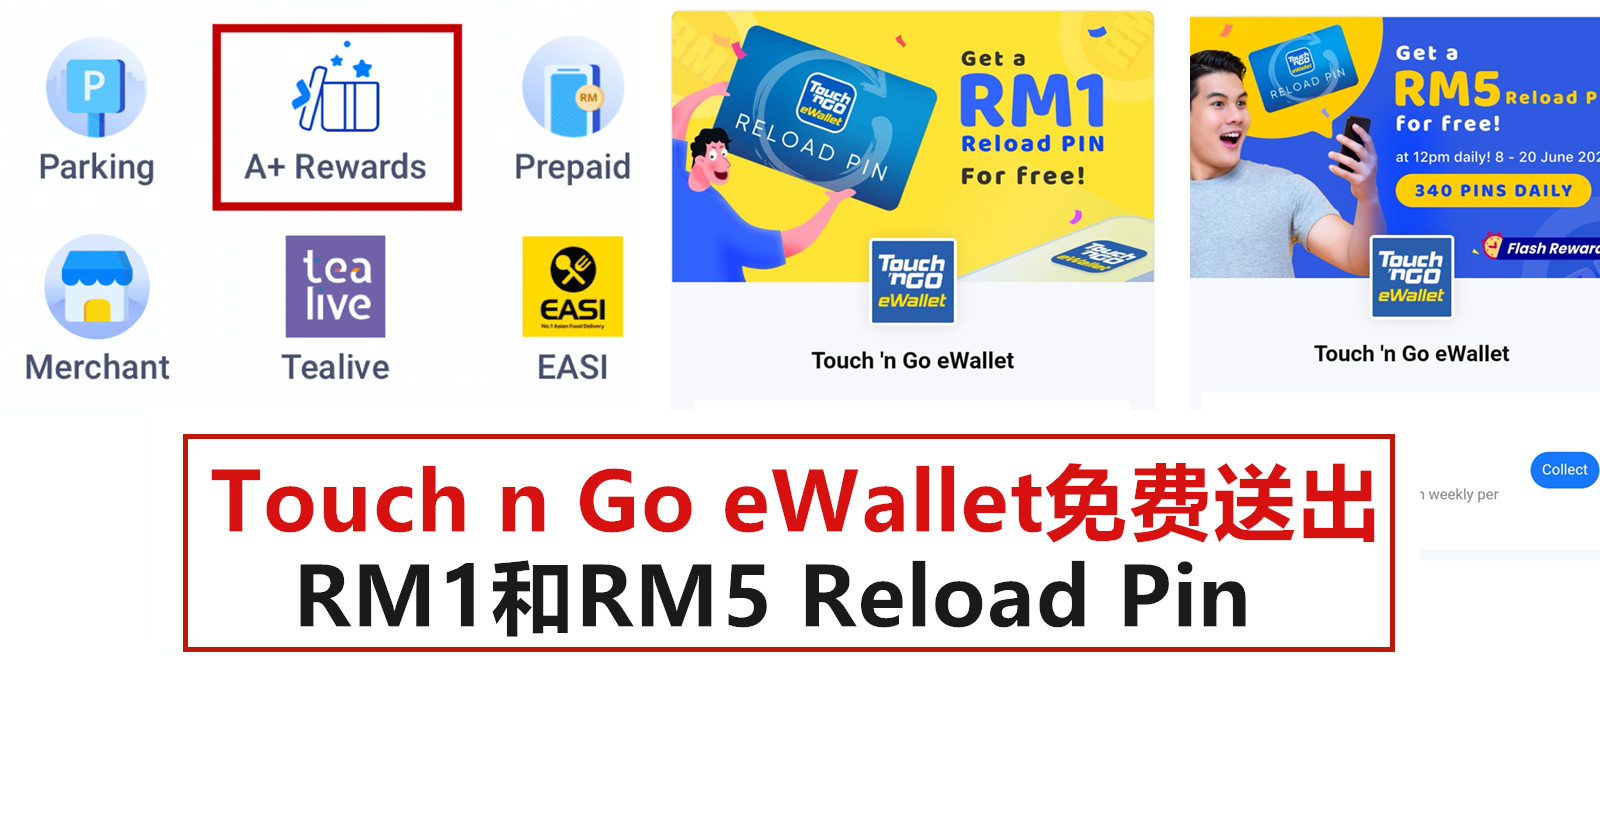 Reload pin free 2021 code tng 11 Jan